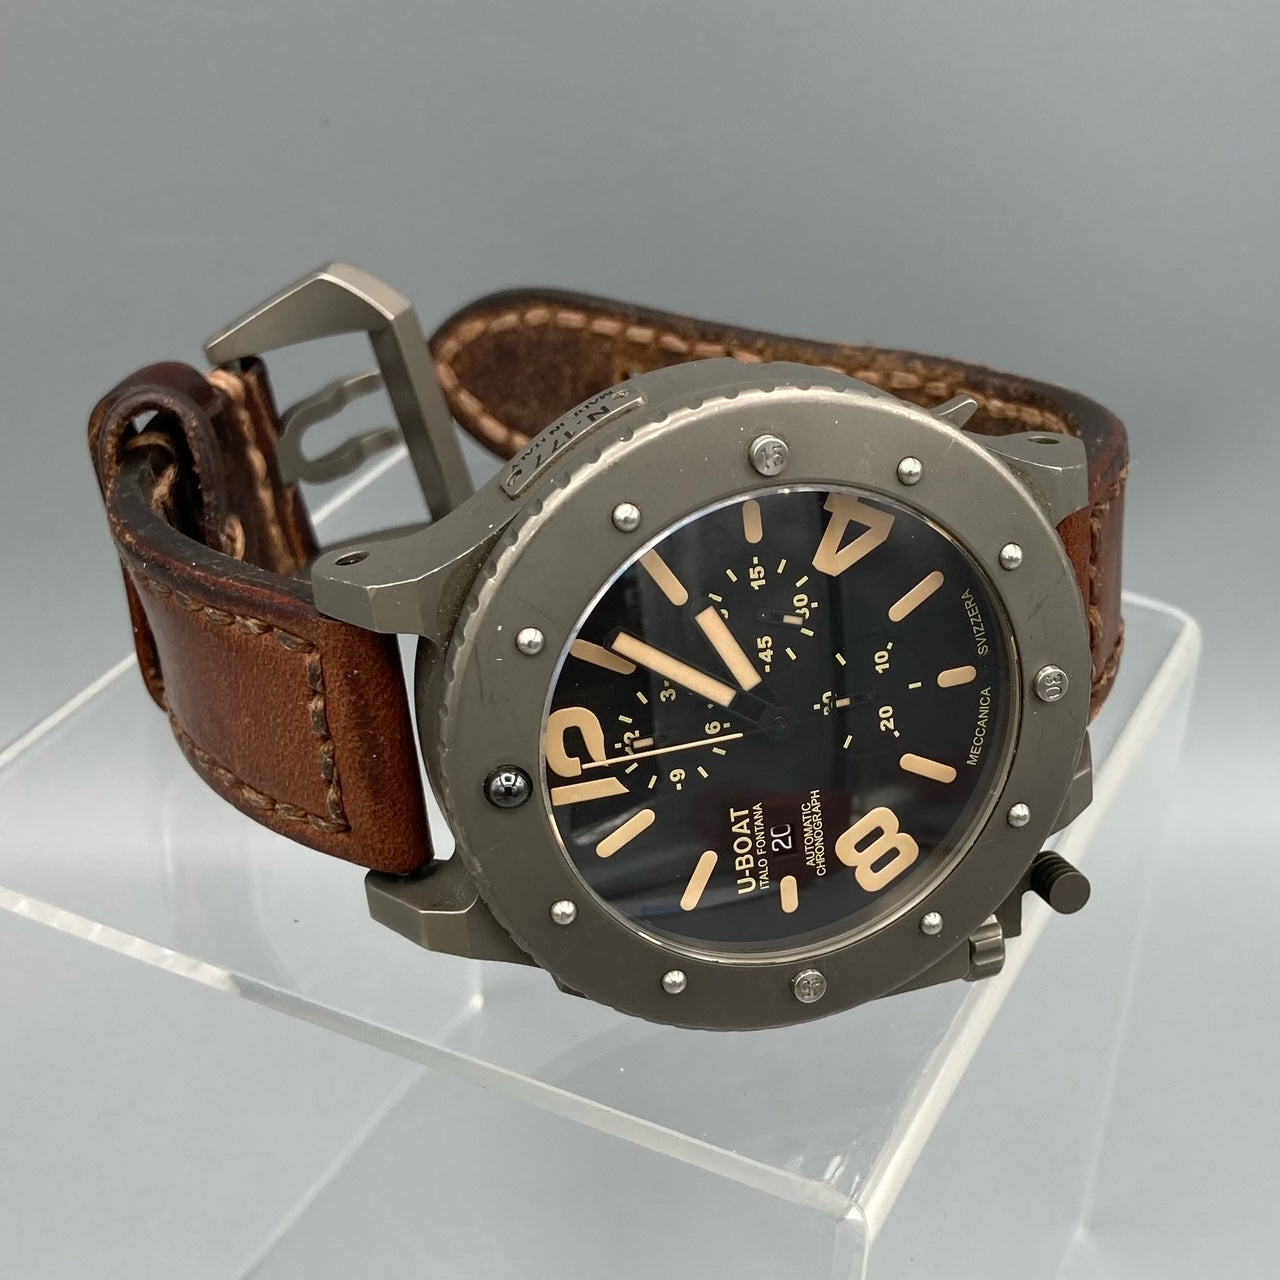 U-Boat Titanium U-42 Chronograph 53mm Watch - 6475